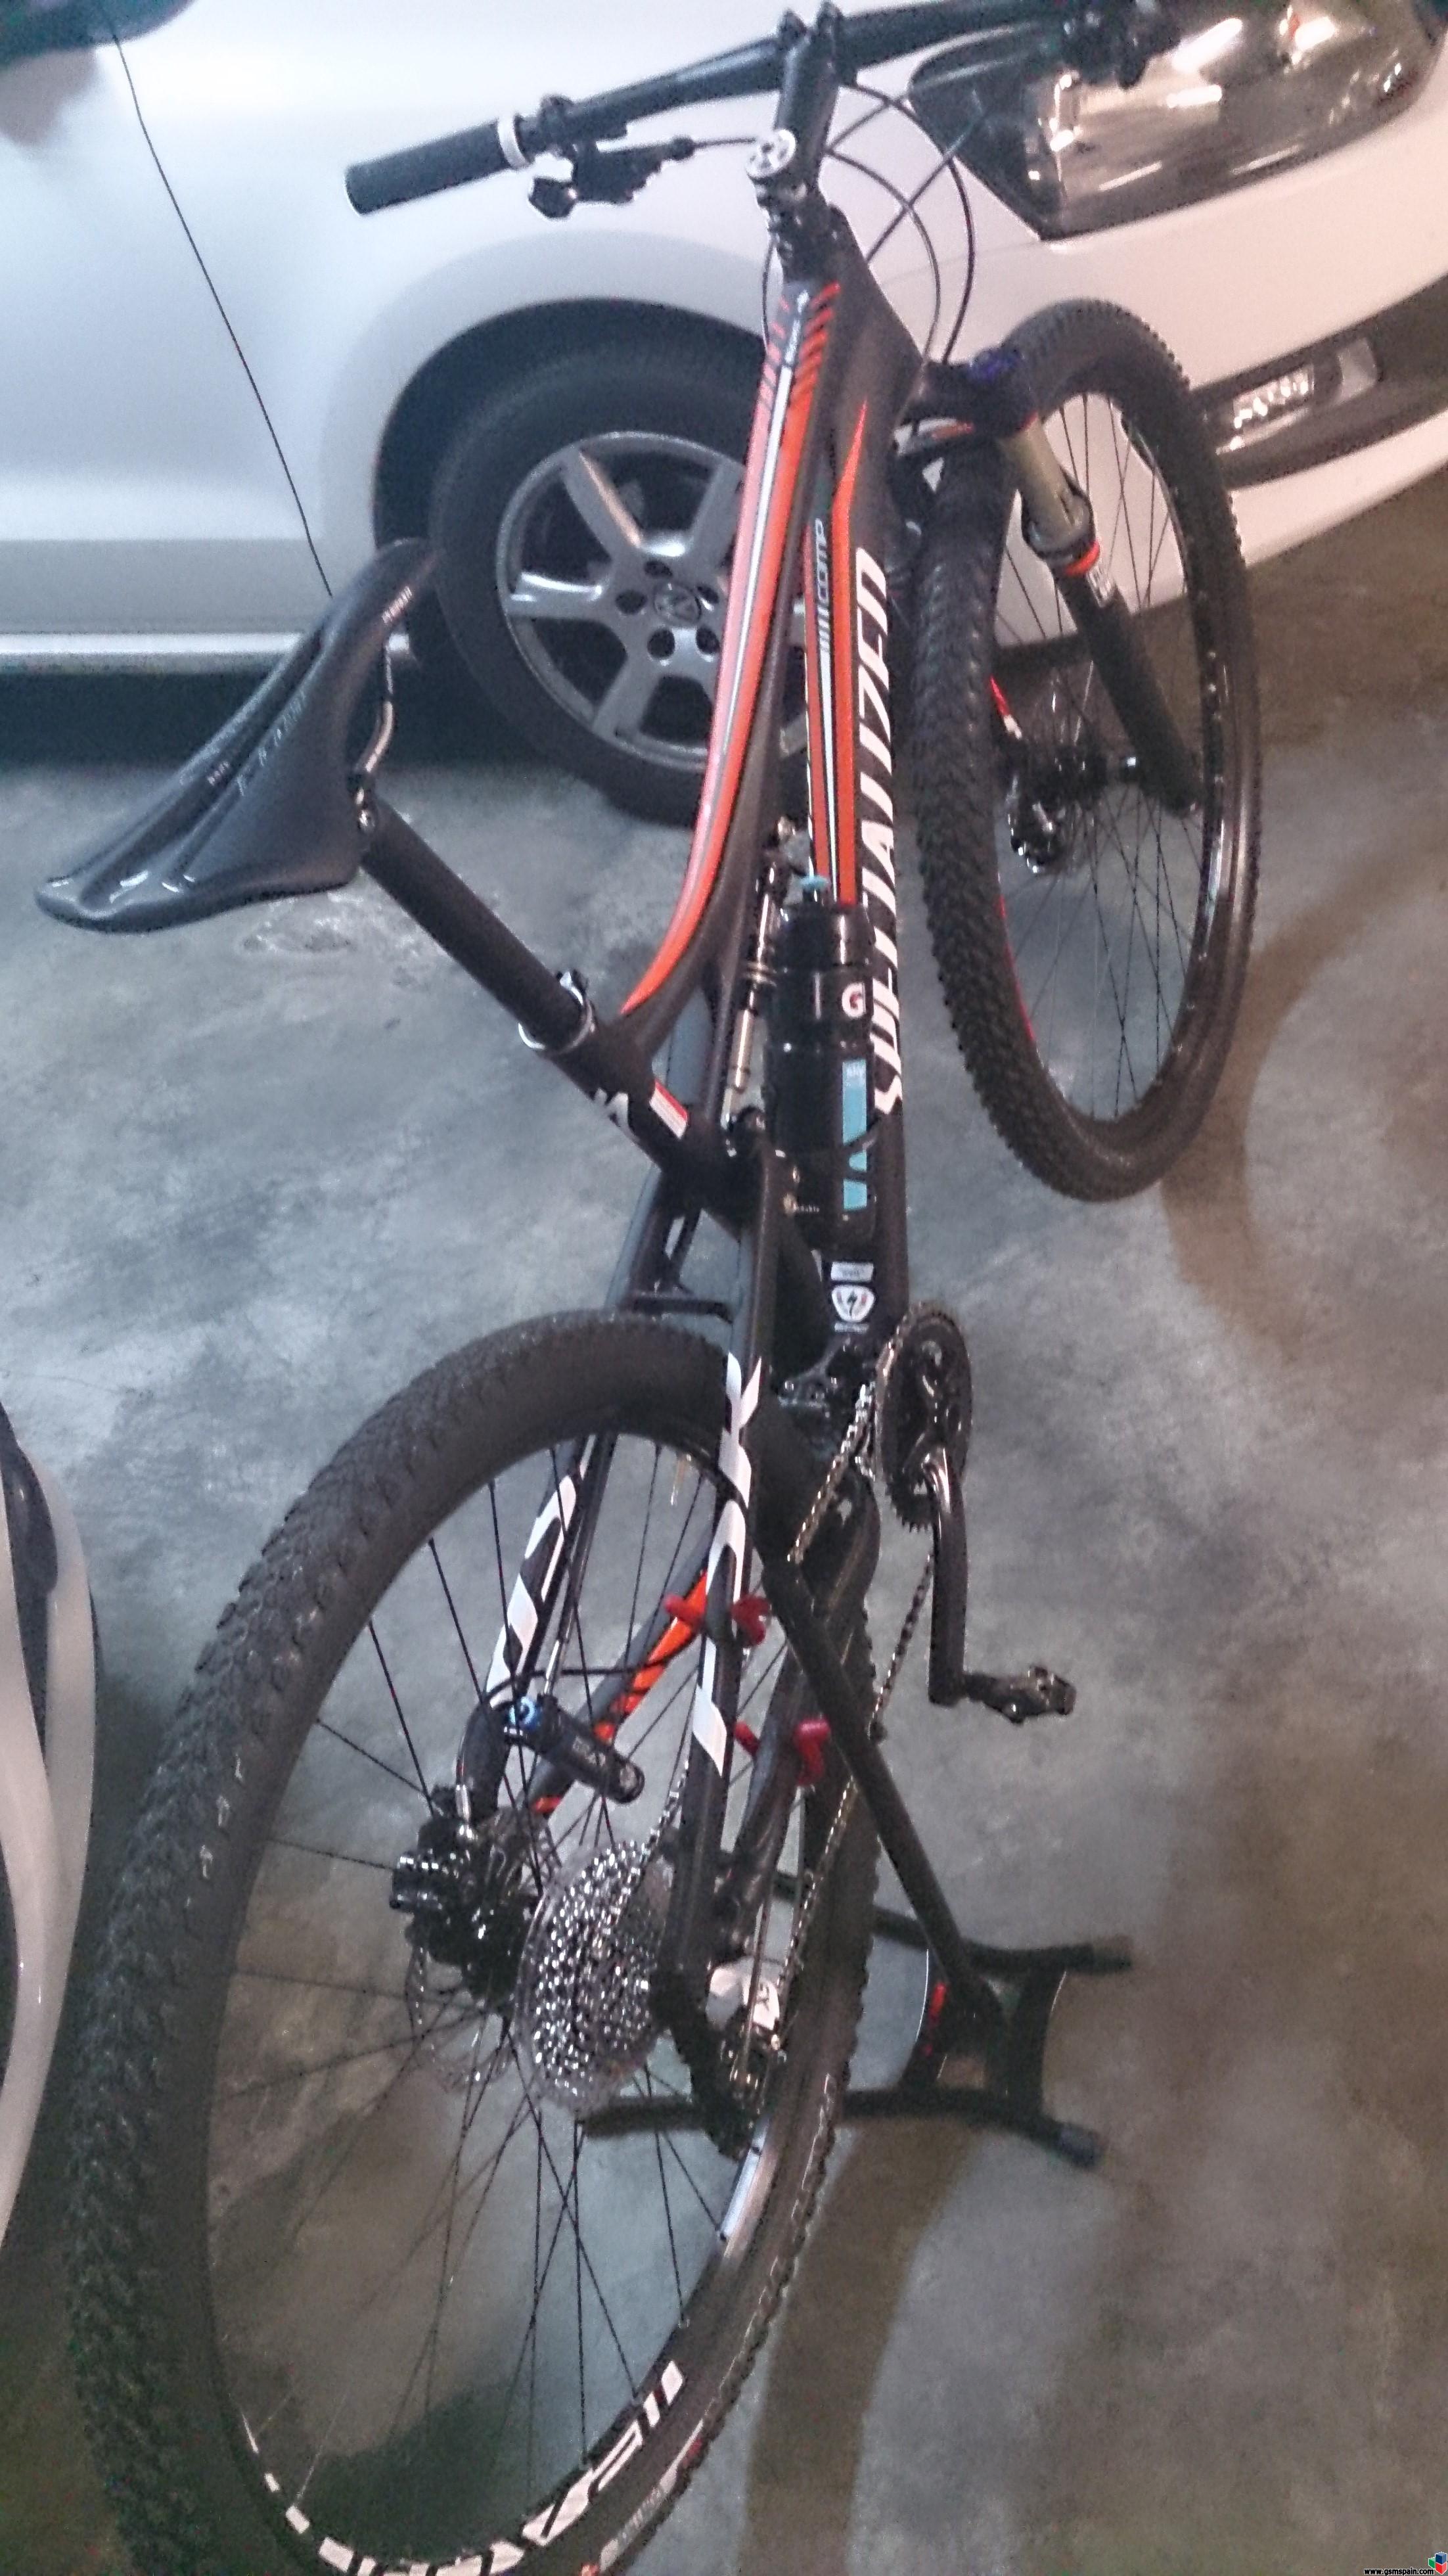 [vendo] @@@@ Bicicleta Specialized Epic 2013 Tiradisima De Precio @@@@@@@